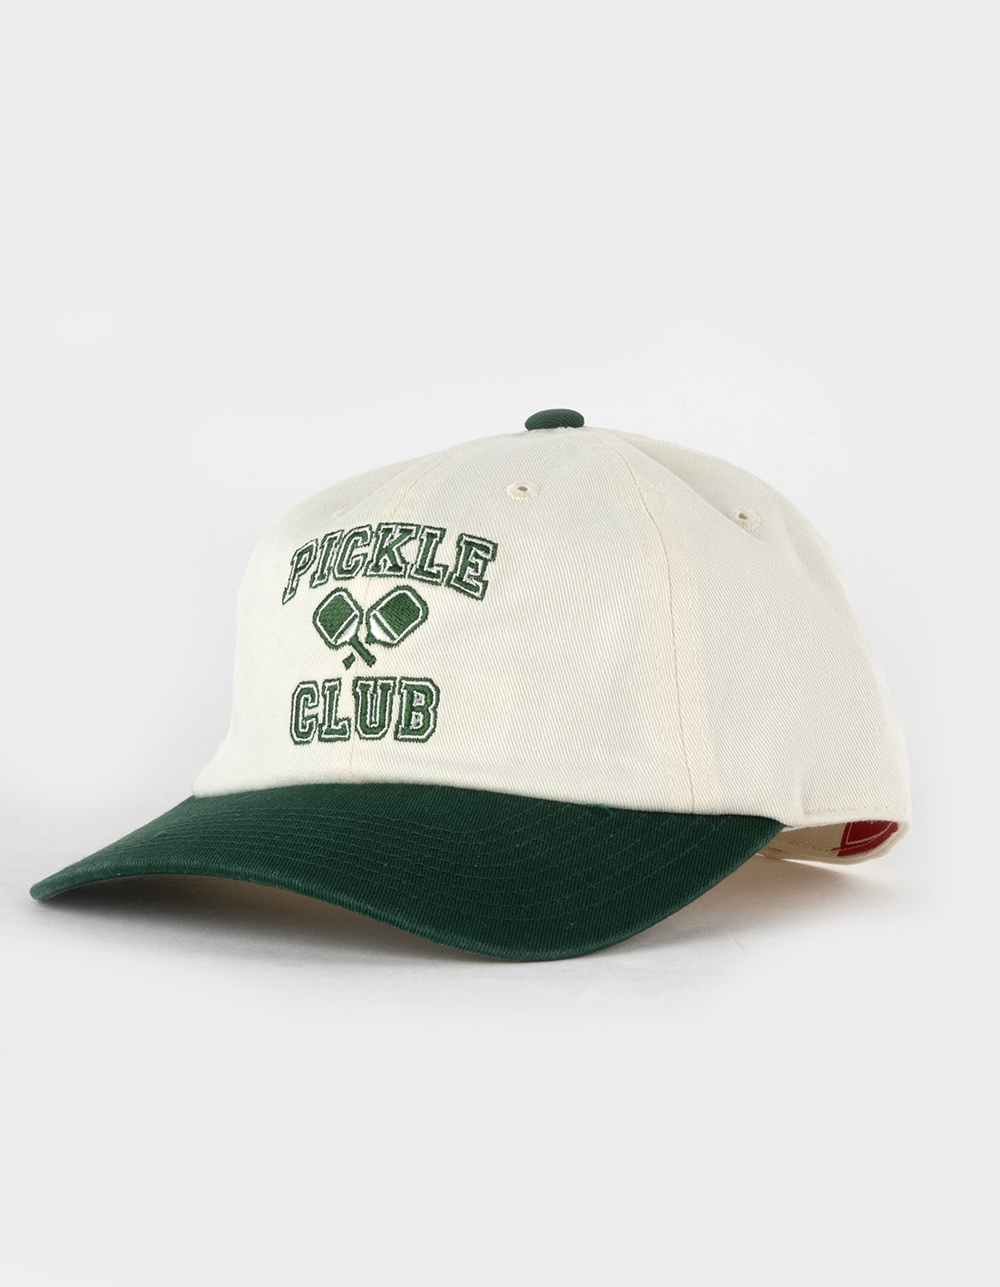 AMERICAN NEEDLE Pickle Ball Ballpark Mens Strapback Hat